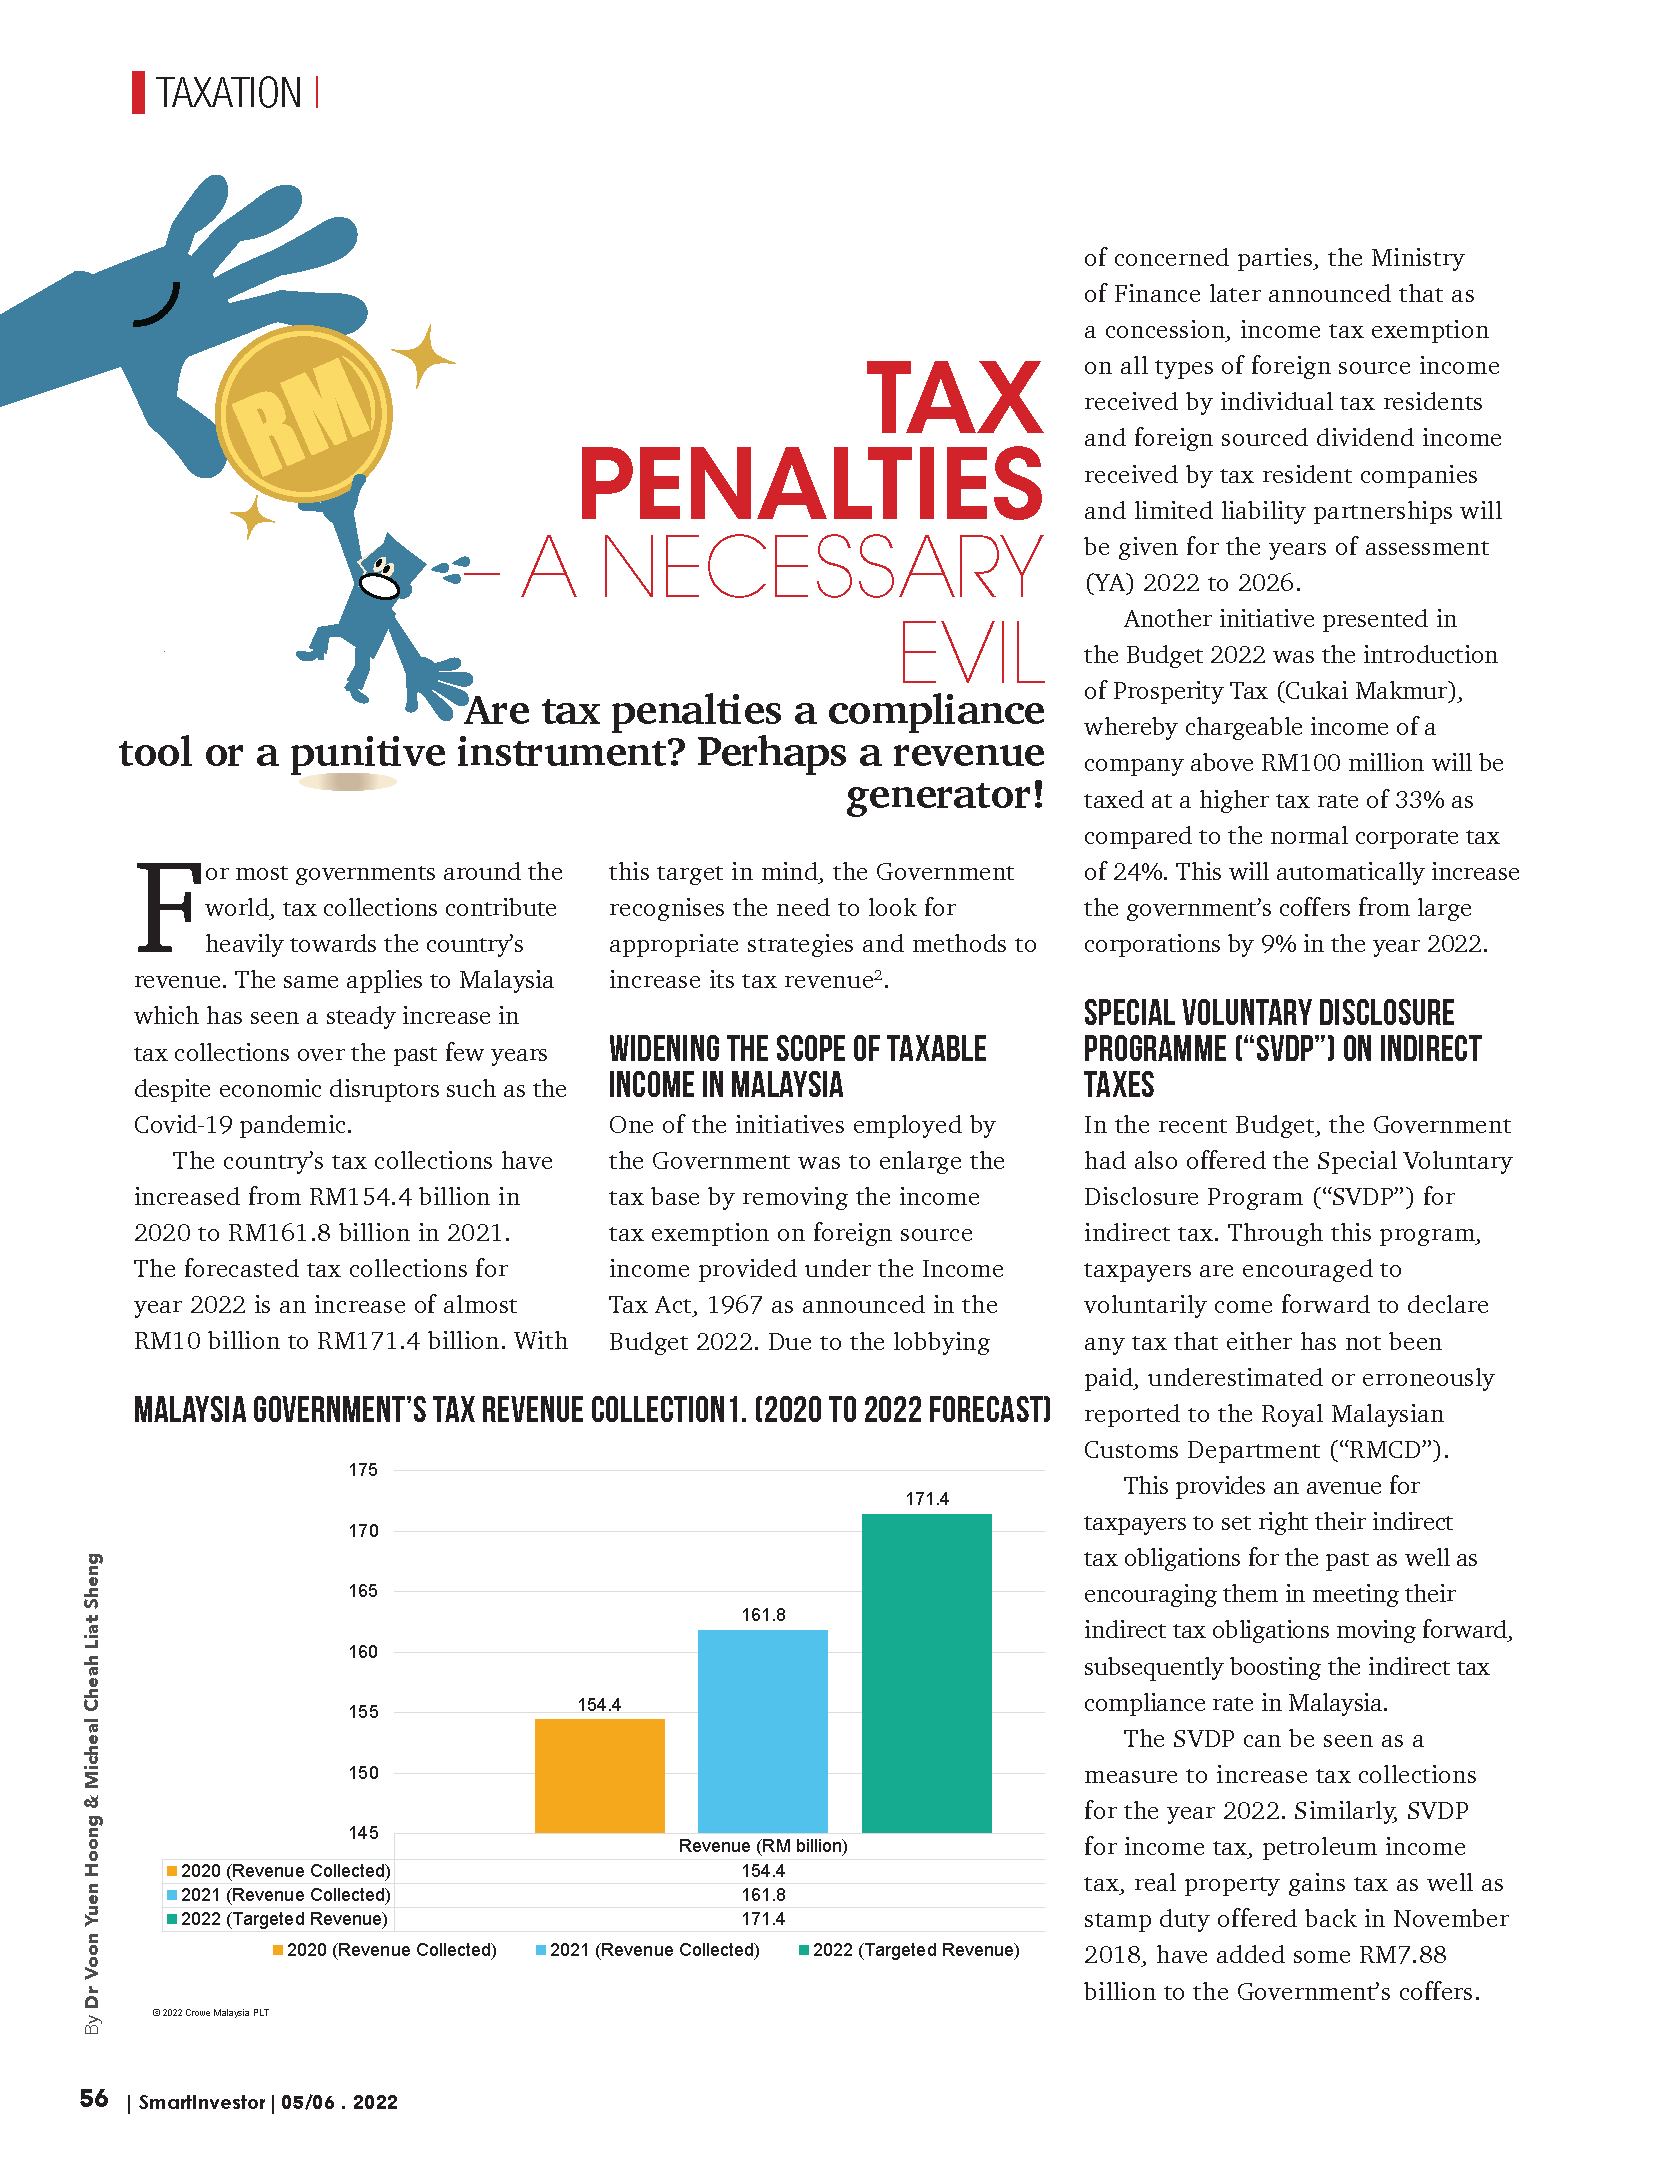 Tax Penalties - A Necessary Evil